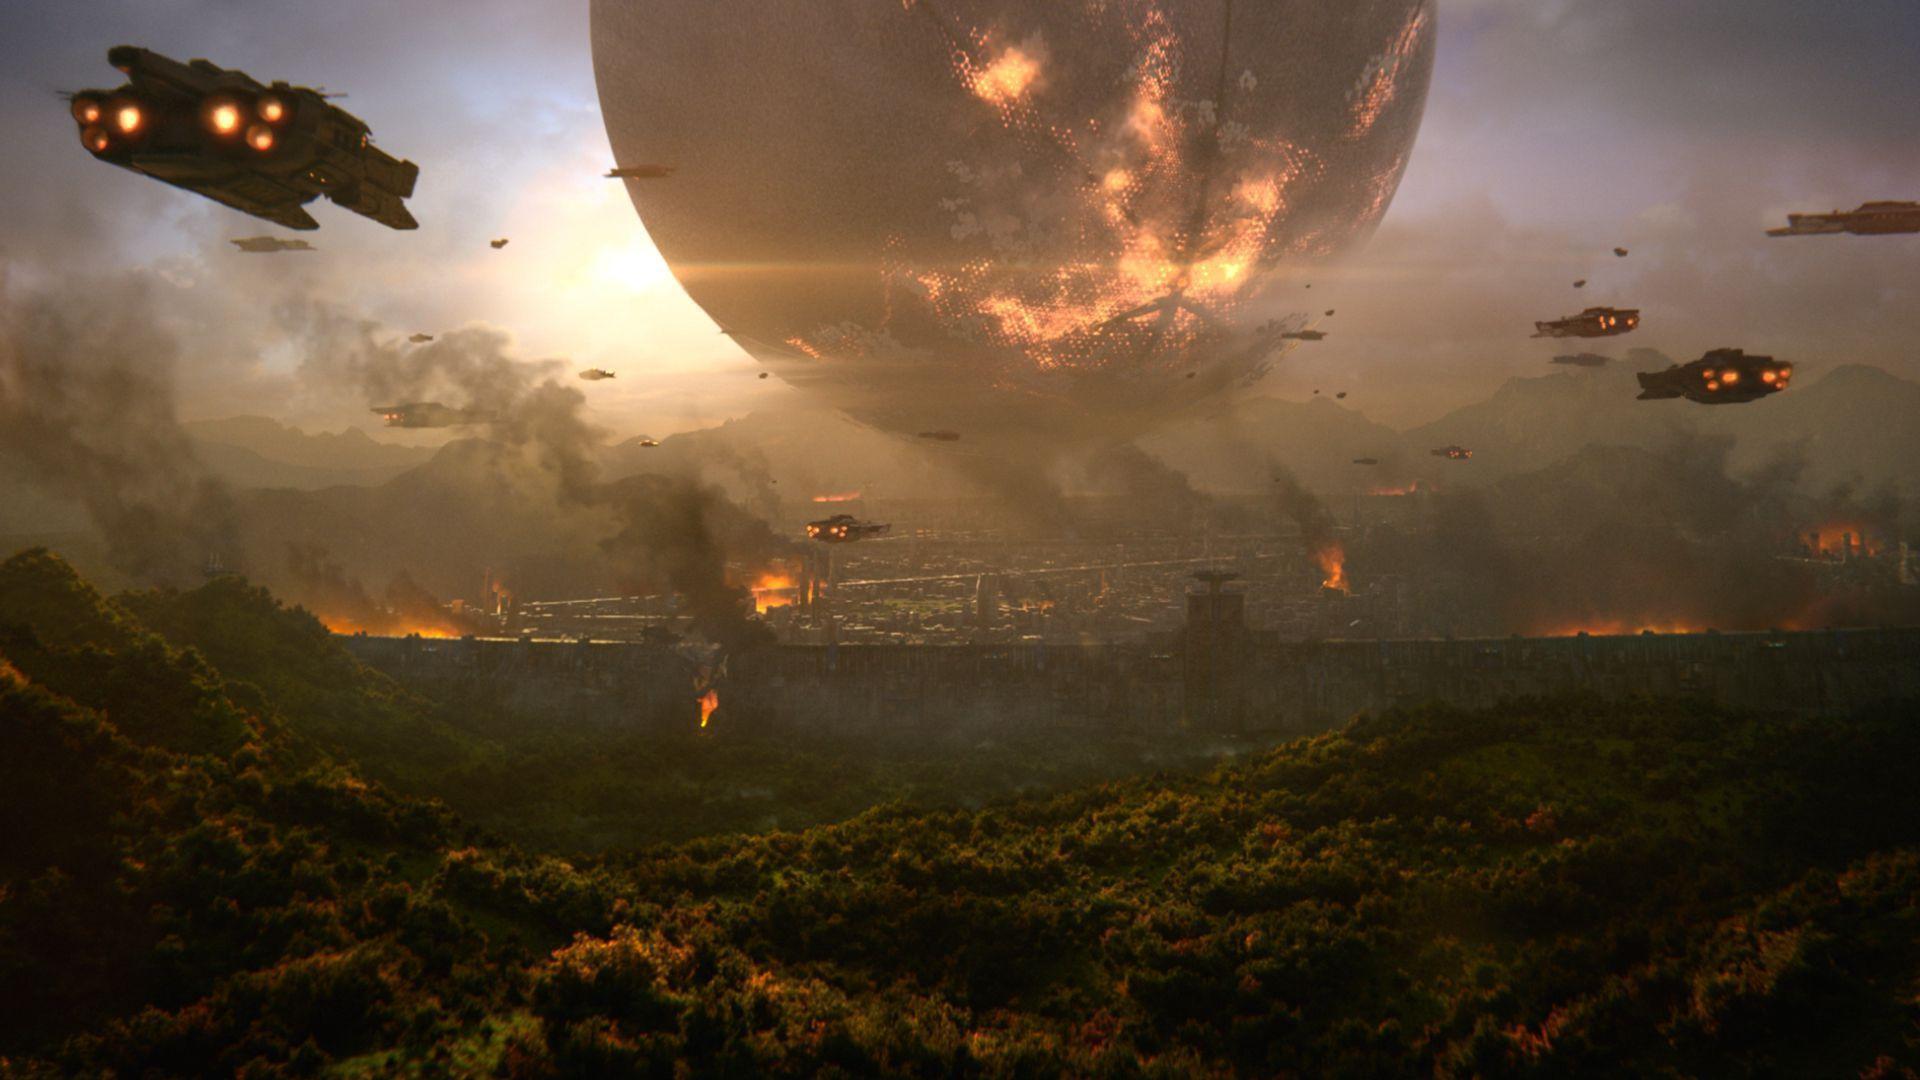 Destiny 2 Wallpaper Image Photo Picture Background